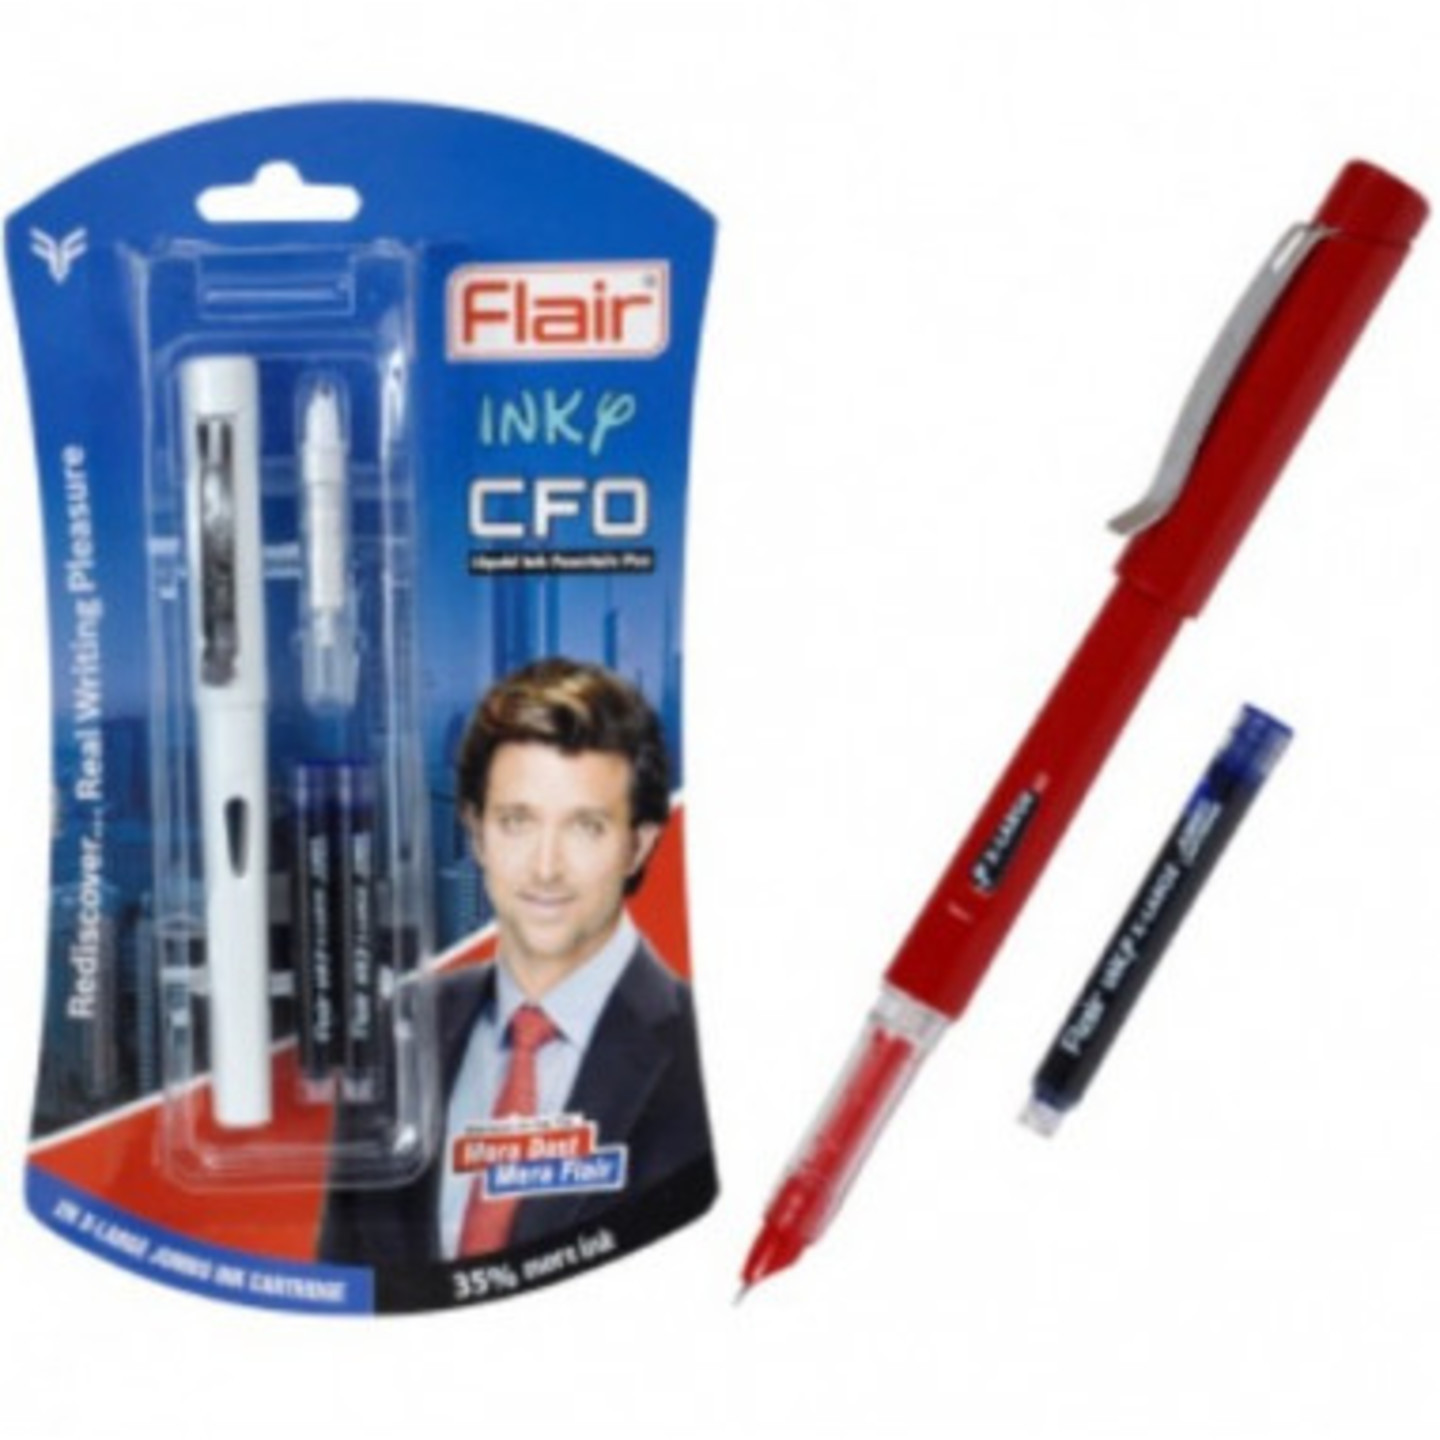 Flair Inky CFO Fountain Pen